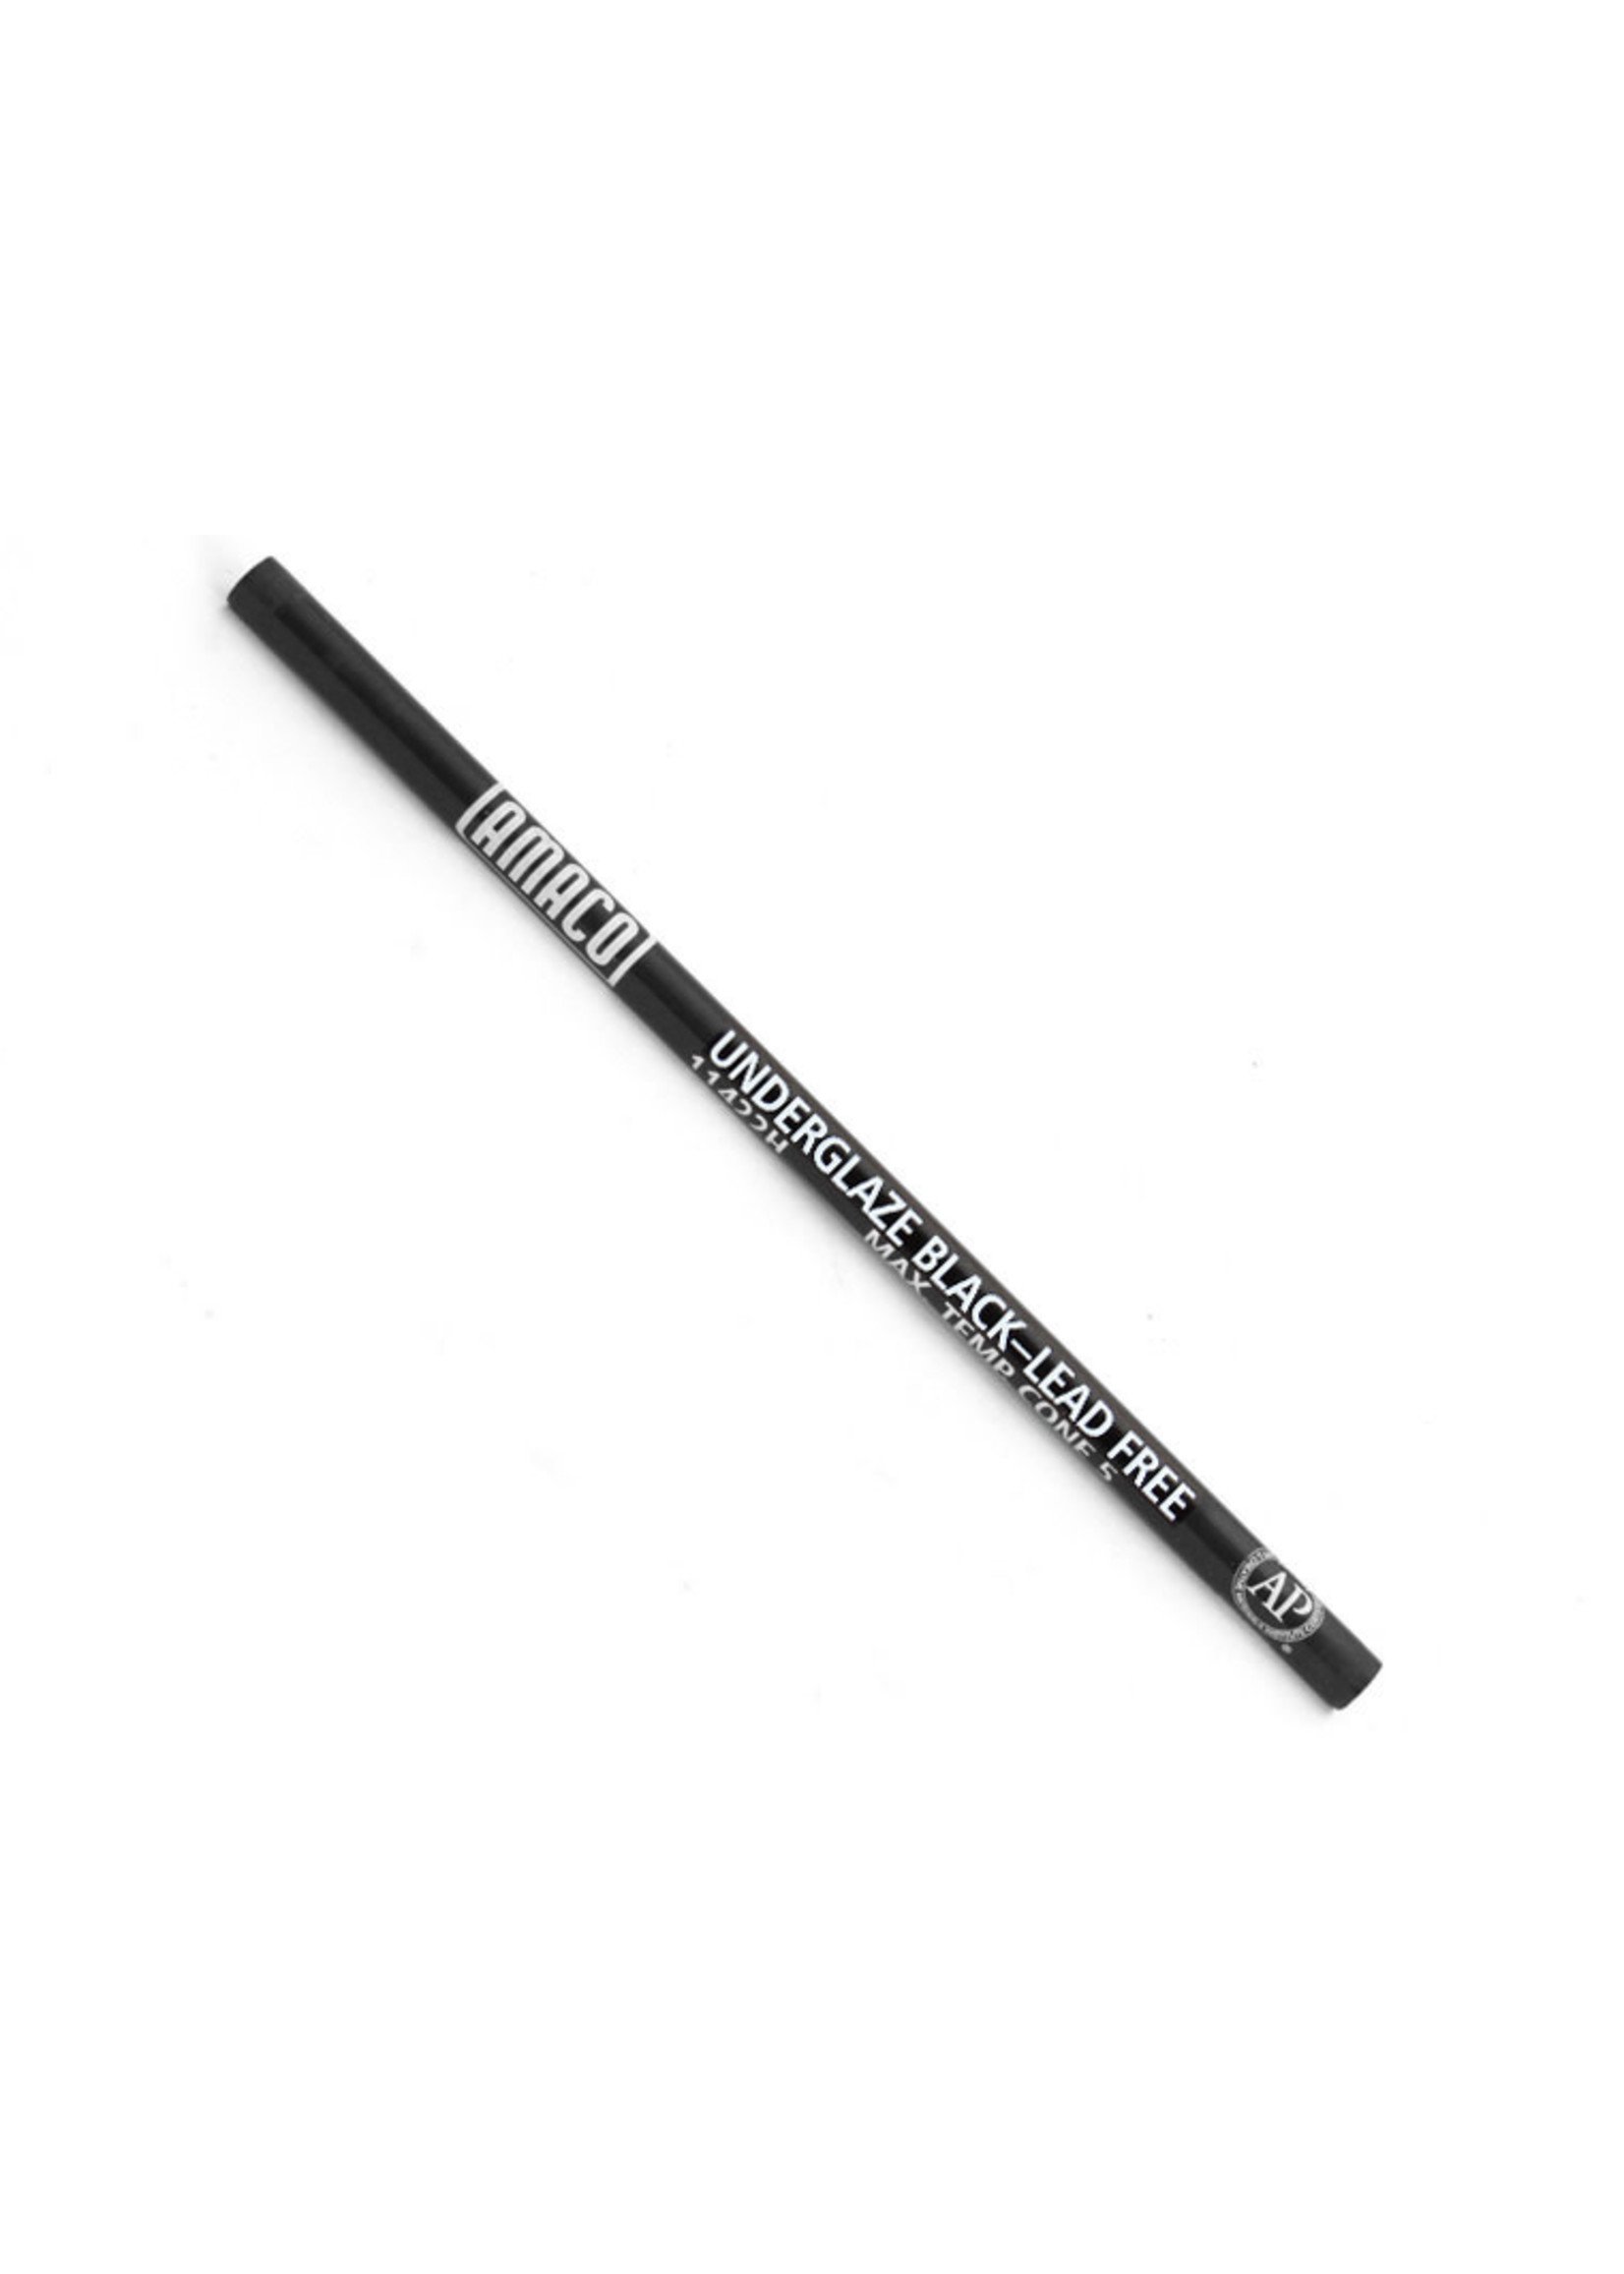  Flyangle Underglaze Pencil For Pottery, Ceramic Black Glaze  Percise Pen Pencil (Black, 1pk) : Arts, Crafts & Sewing